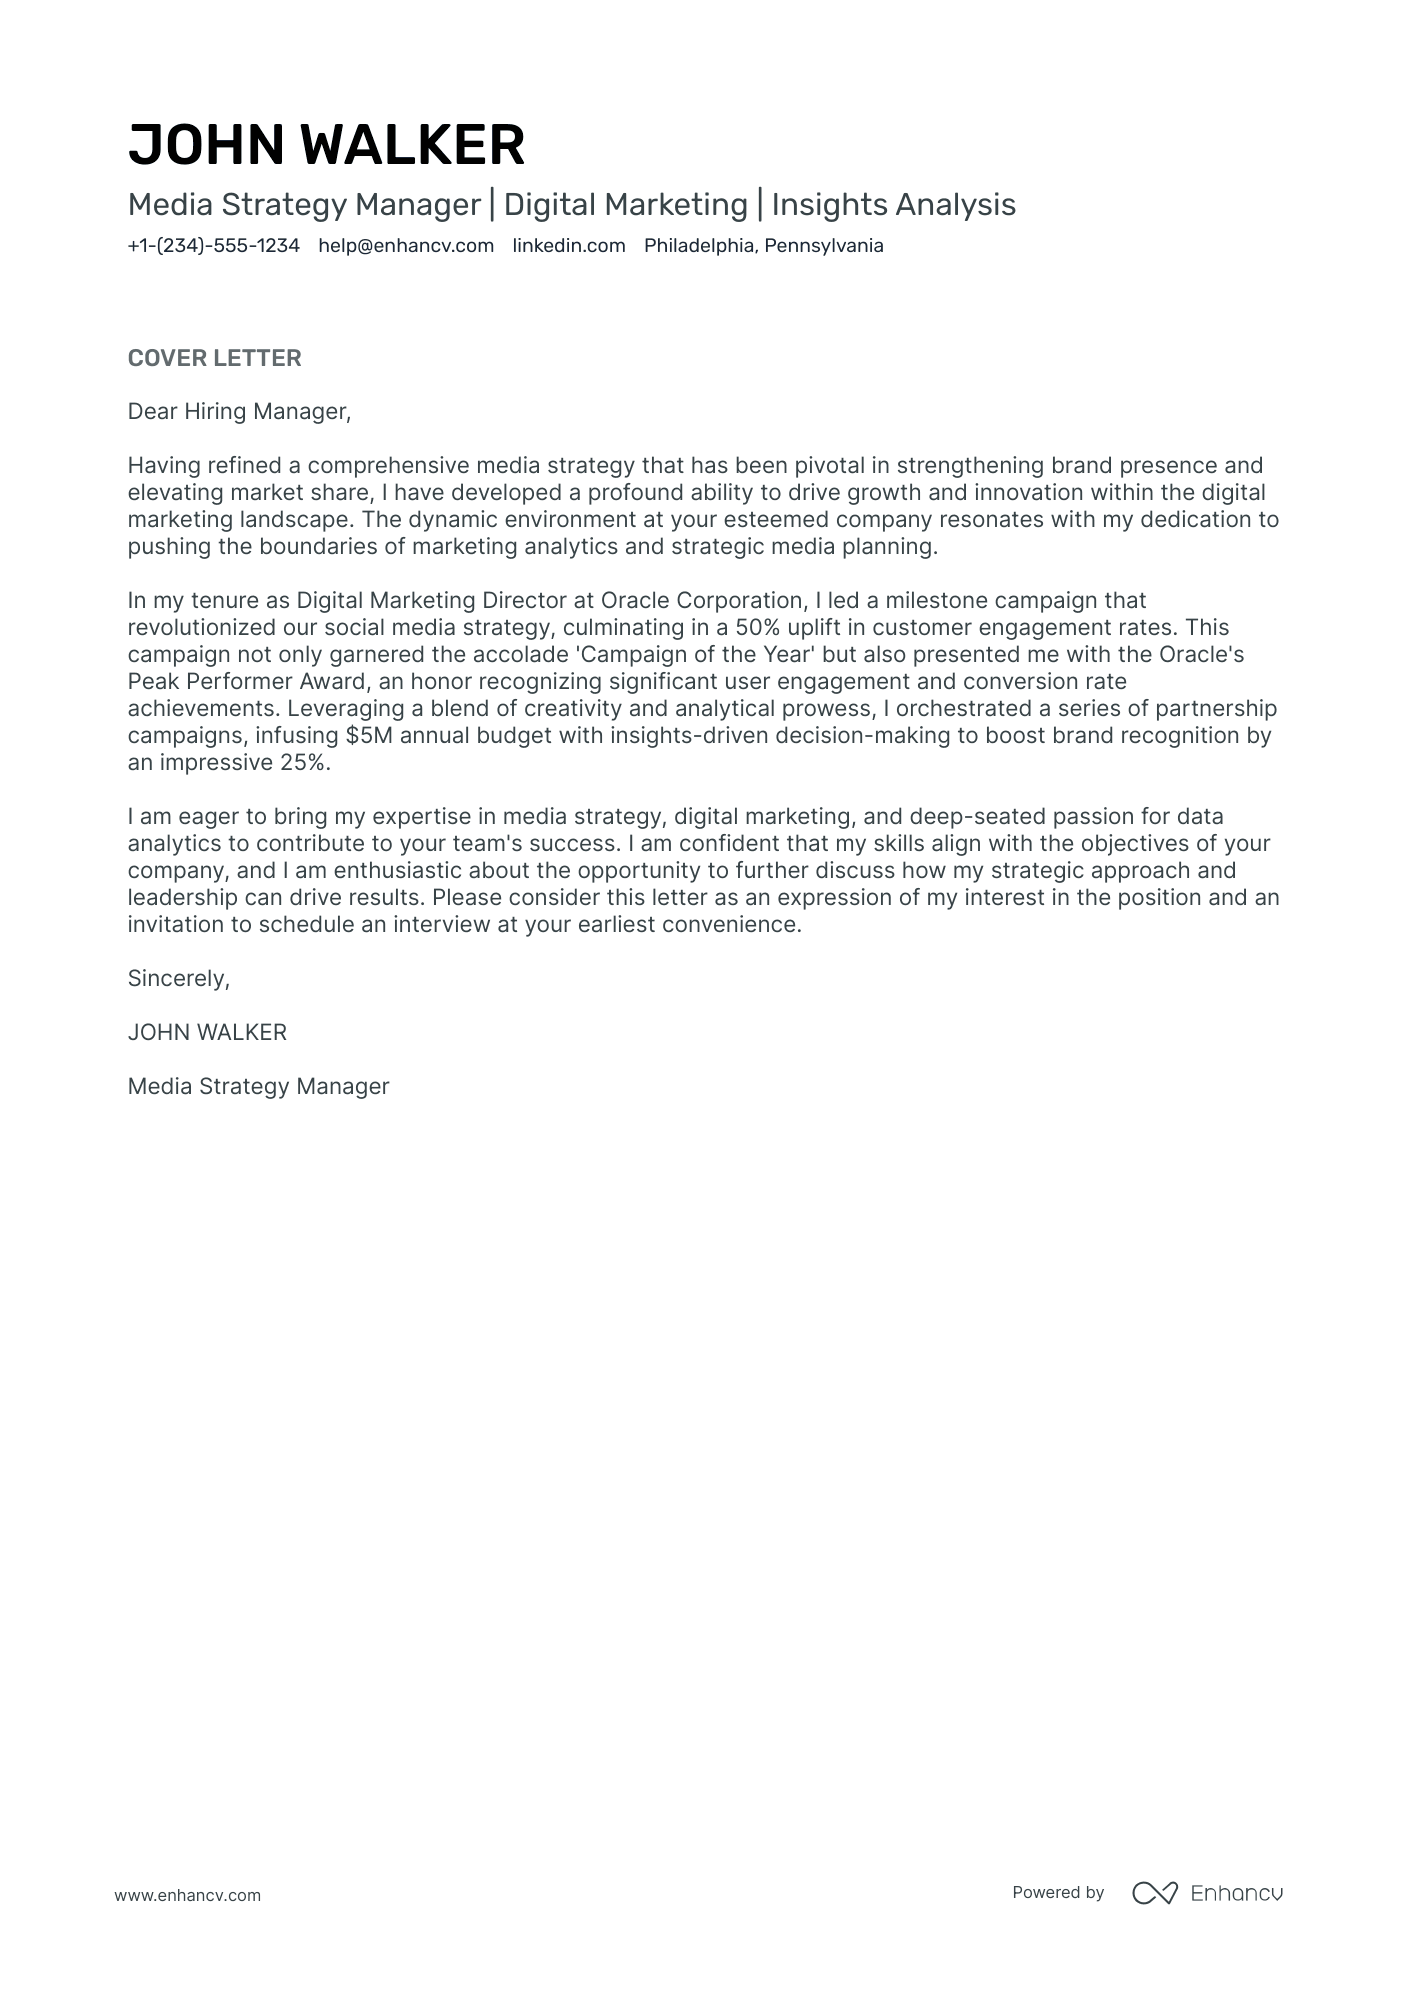 Media Manager cover letter